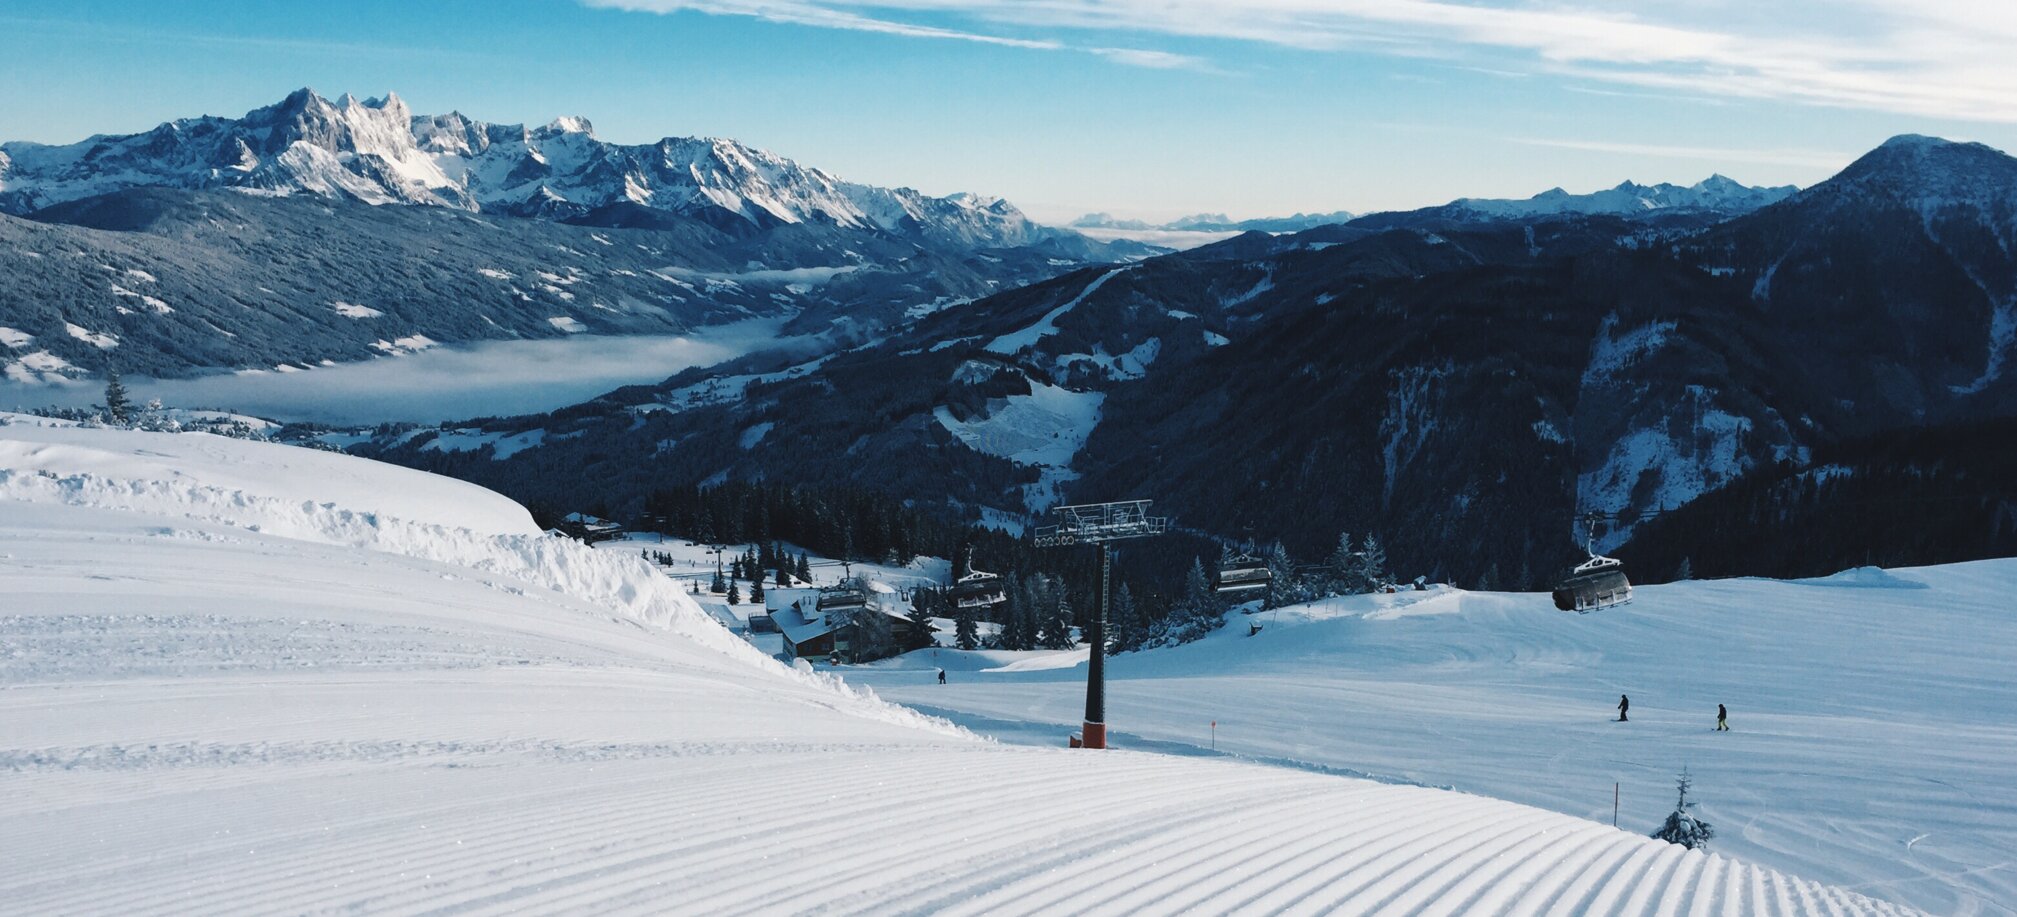 Perfekt präparierte Skipisten in Ski amadé